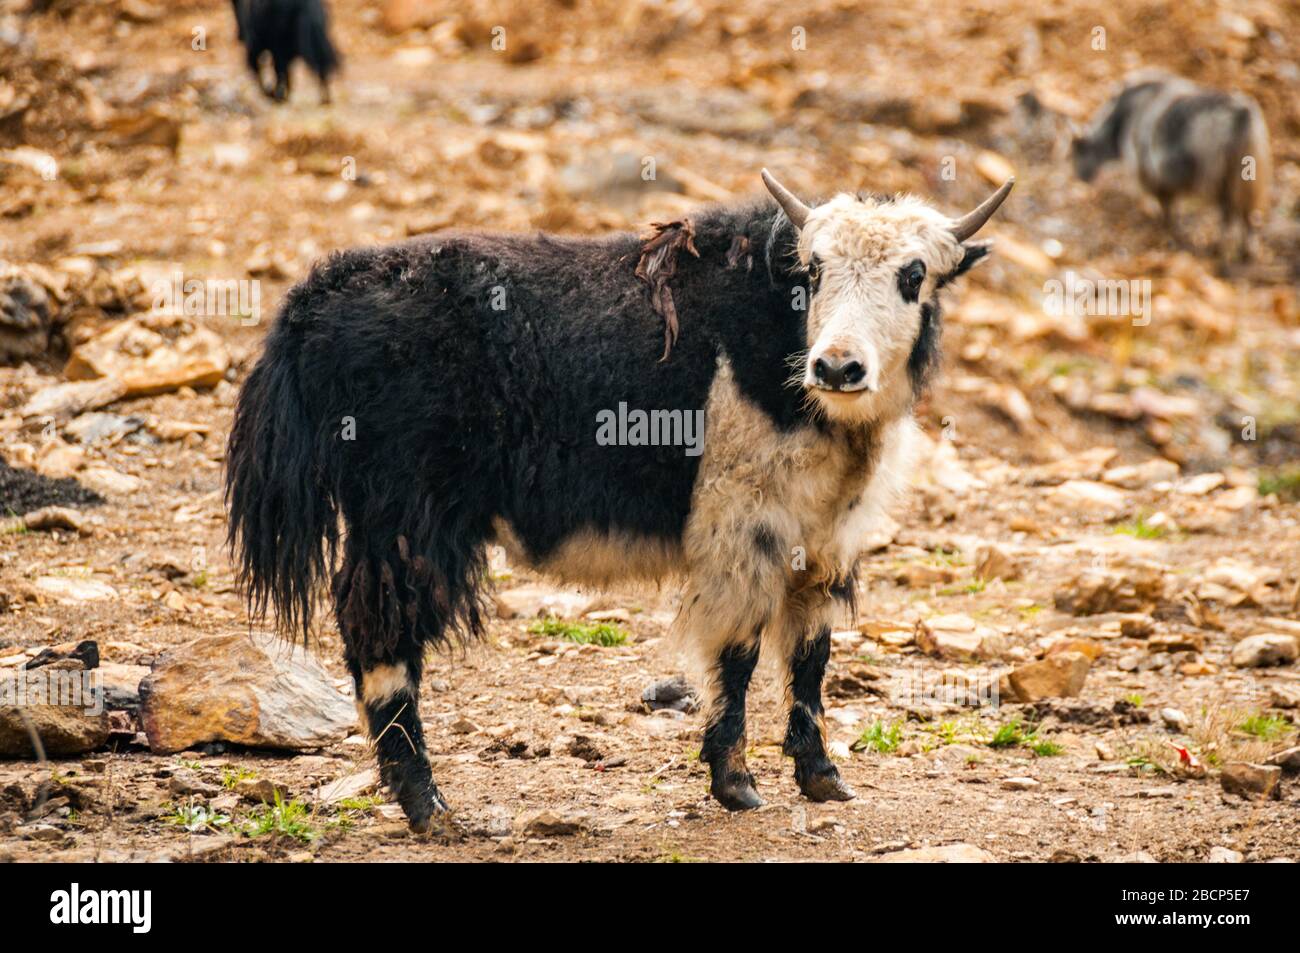 baby yak animal